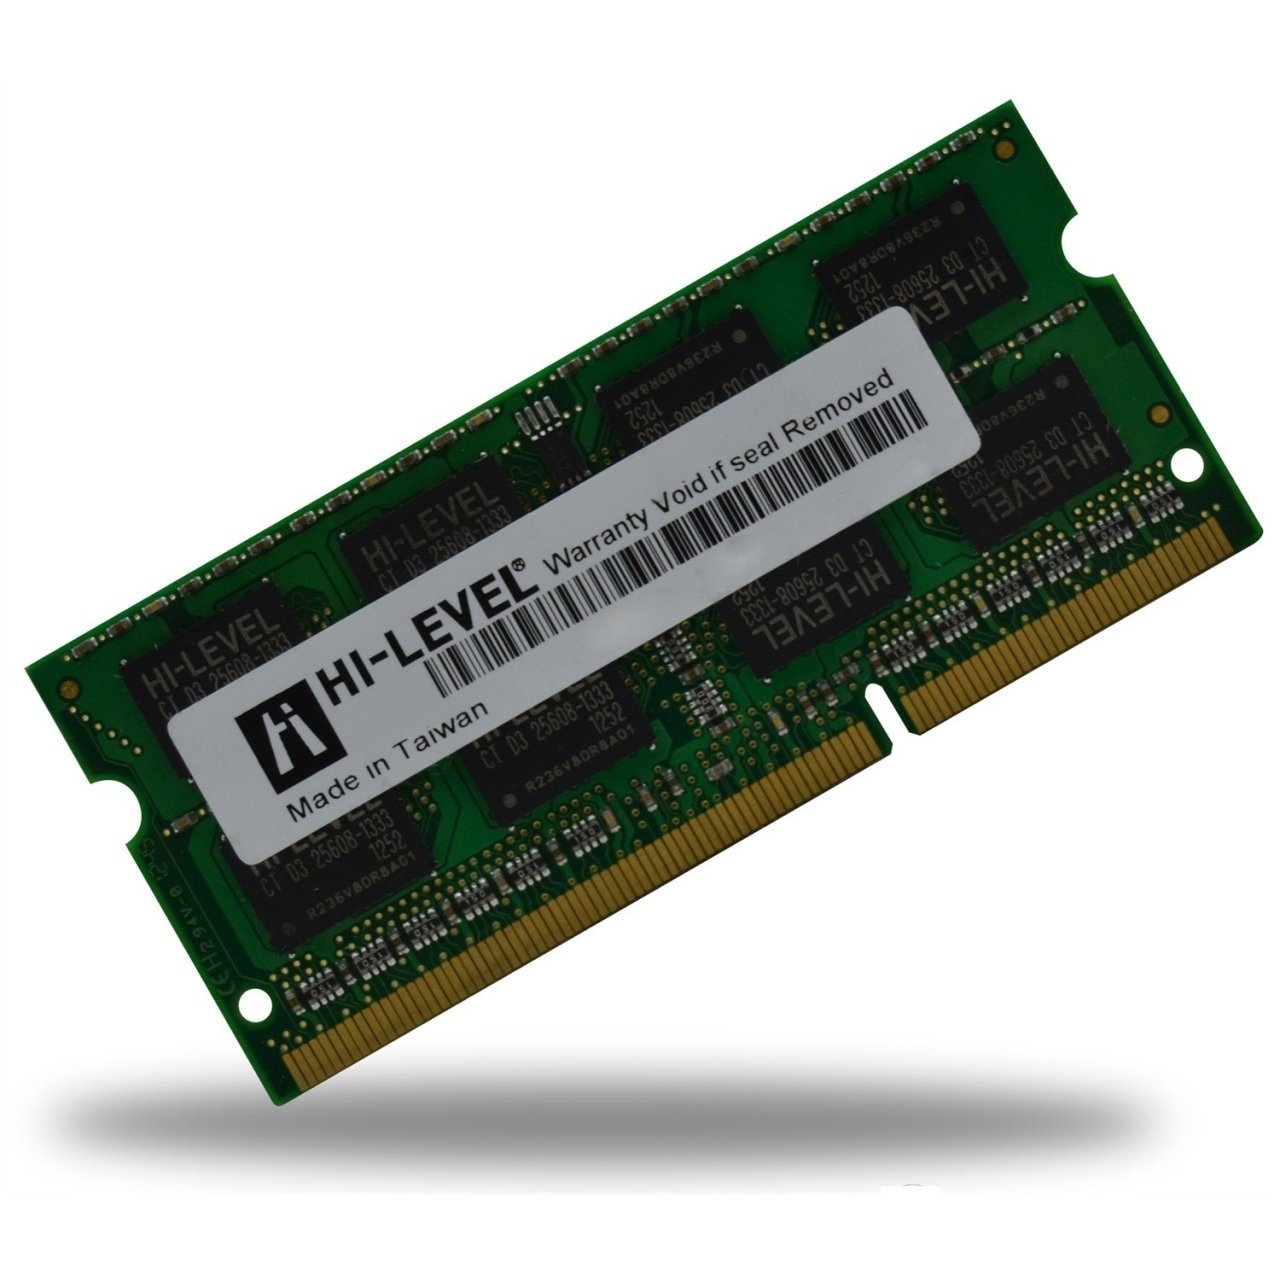 Hi-Level 1GB 667MHz DDR2 (HLV-SOPC5300/1G) Notebook Ram